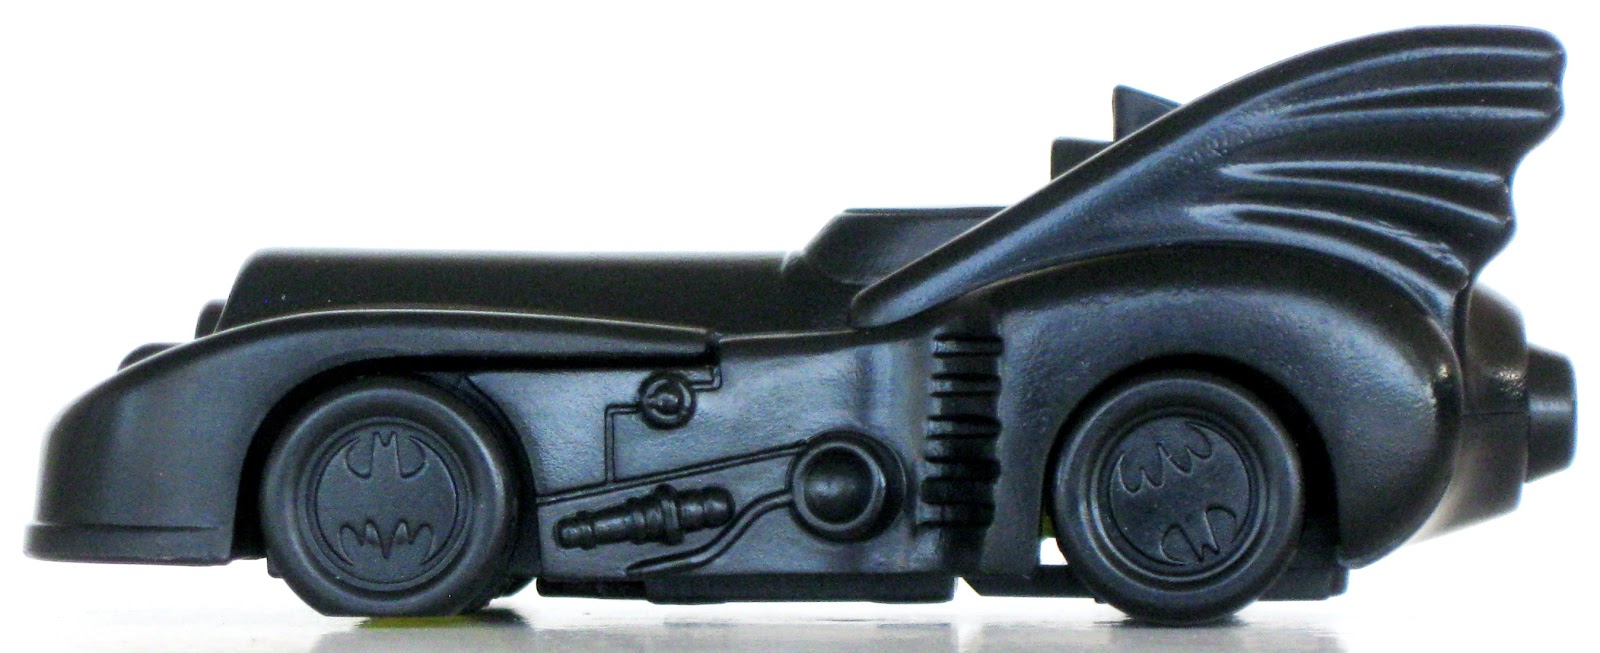 Toys and Stuff: 1992 McDonald's Batman Returns Batmobile